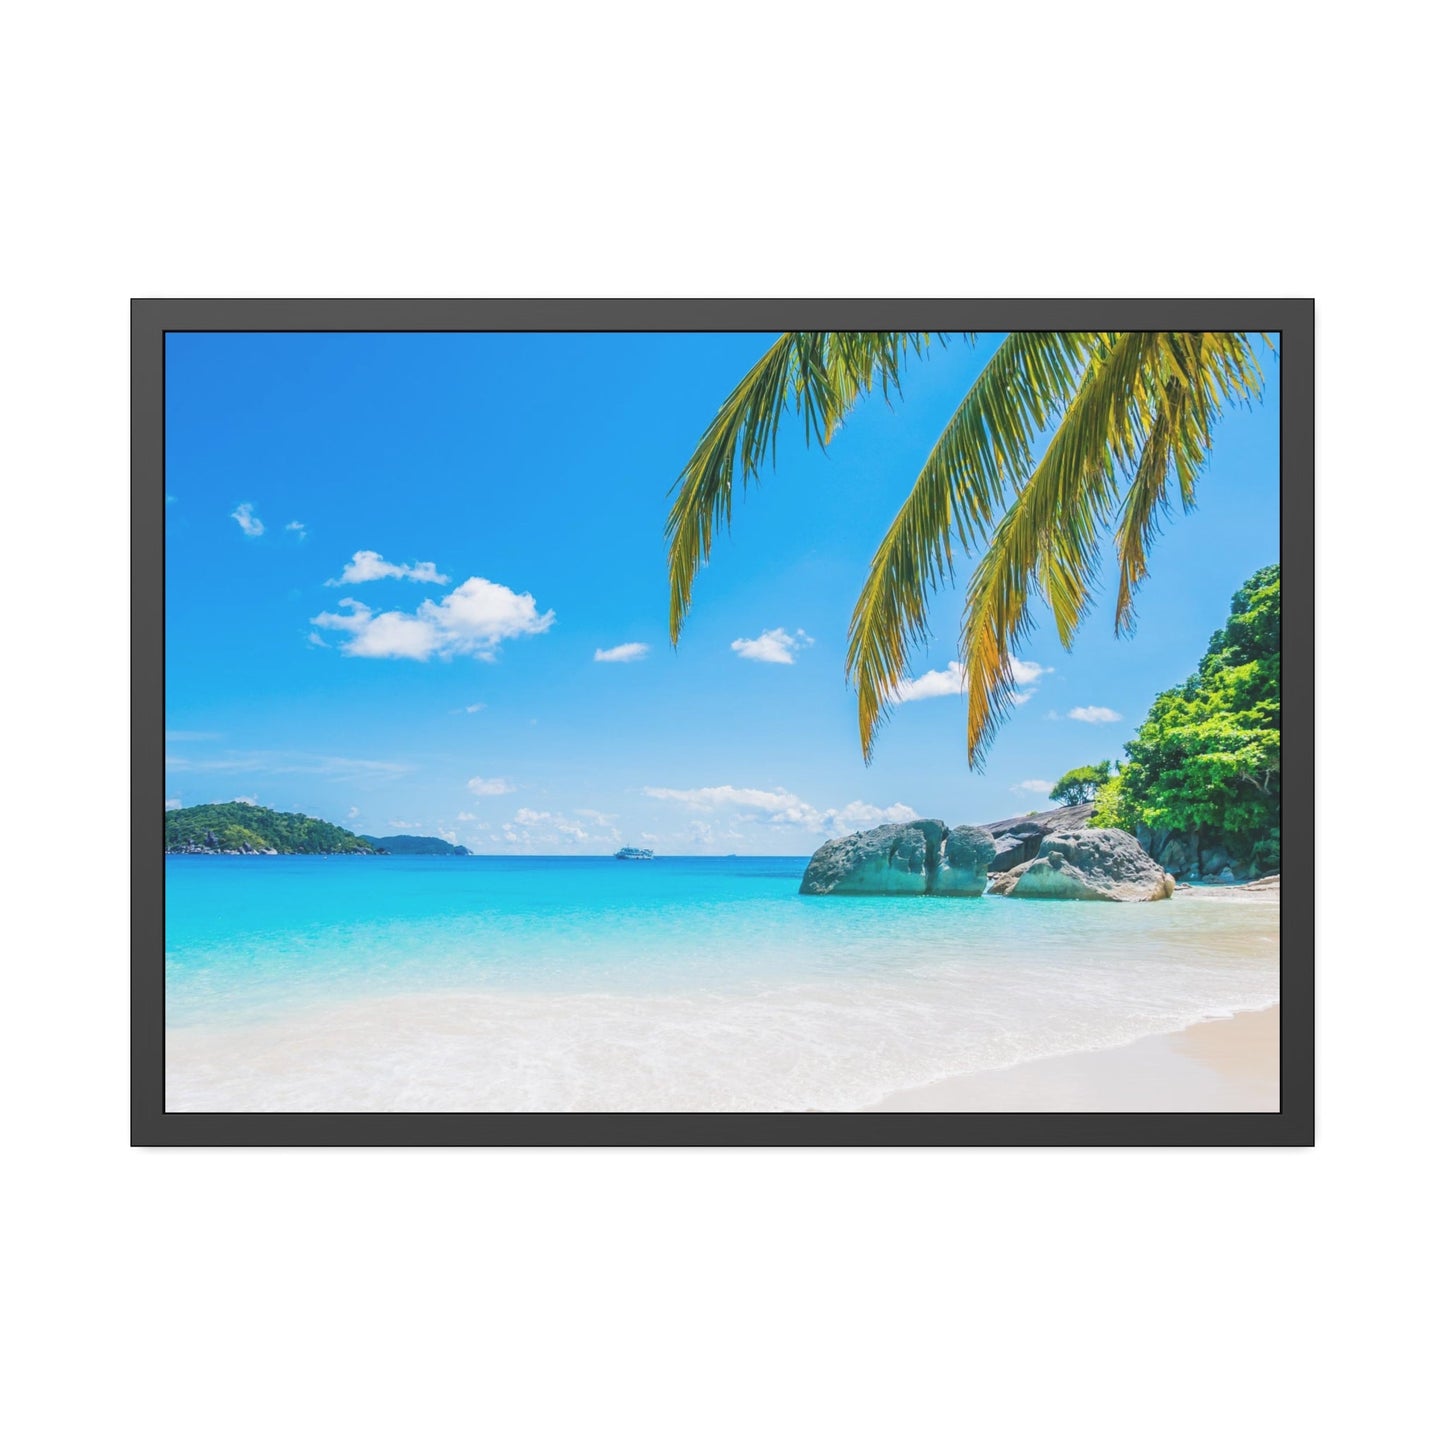 Island Getaway: Framed Canvas of a Secluded Beach on an Island